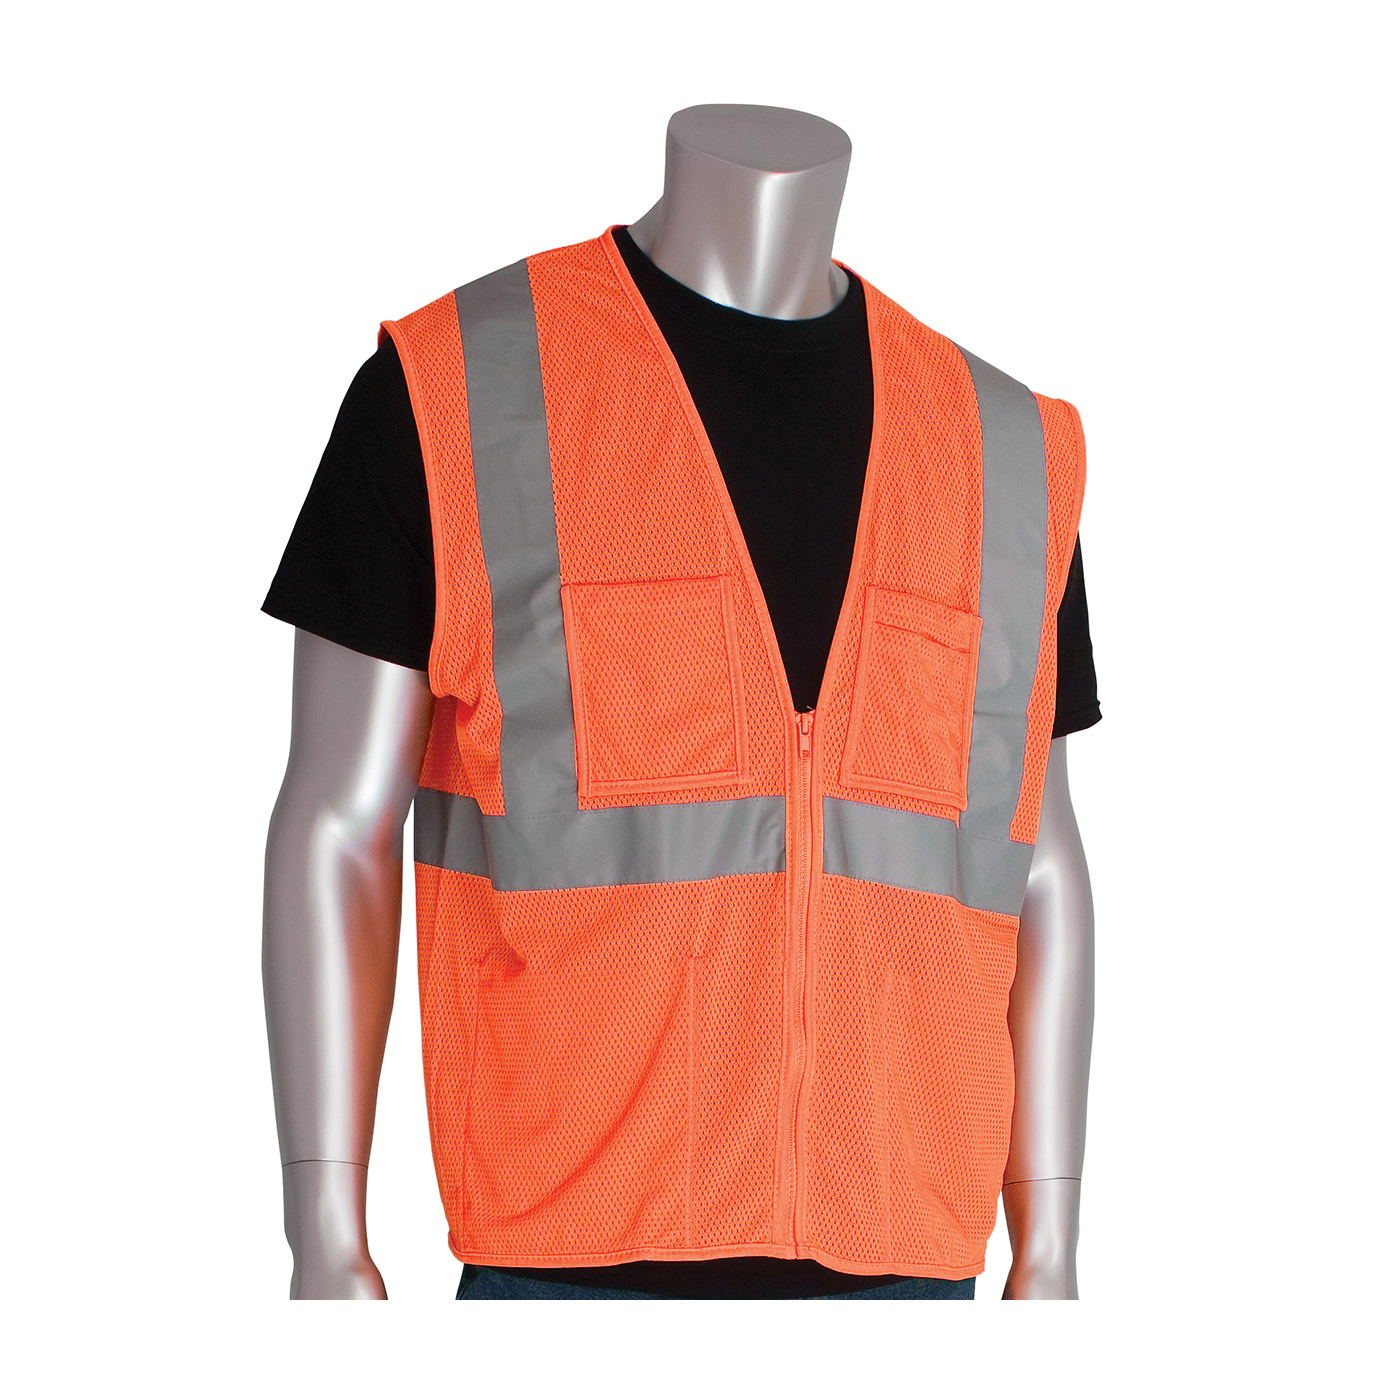 PIP® 302-MVGZ4POR-M Safety Vest, M, Hi-Viz Orange, Polyester Mesh, Zipper Closure, 4 Pockets, ANSI Class: Class 2, Specifications Met: ANSI 107 Type R